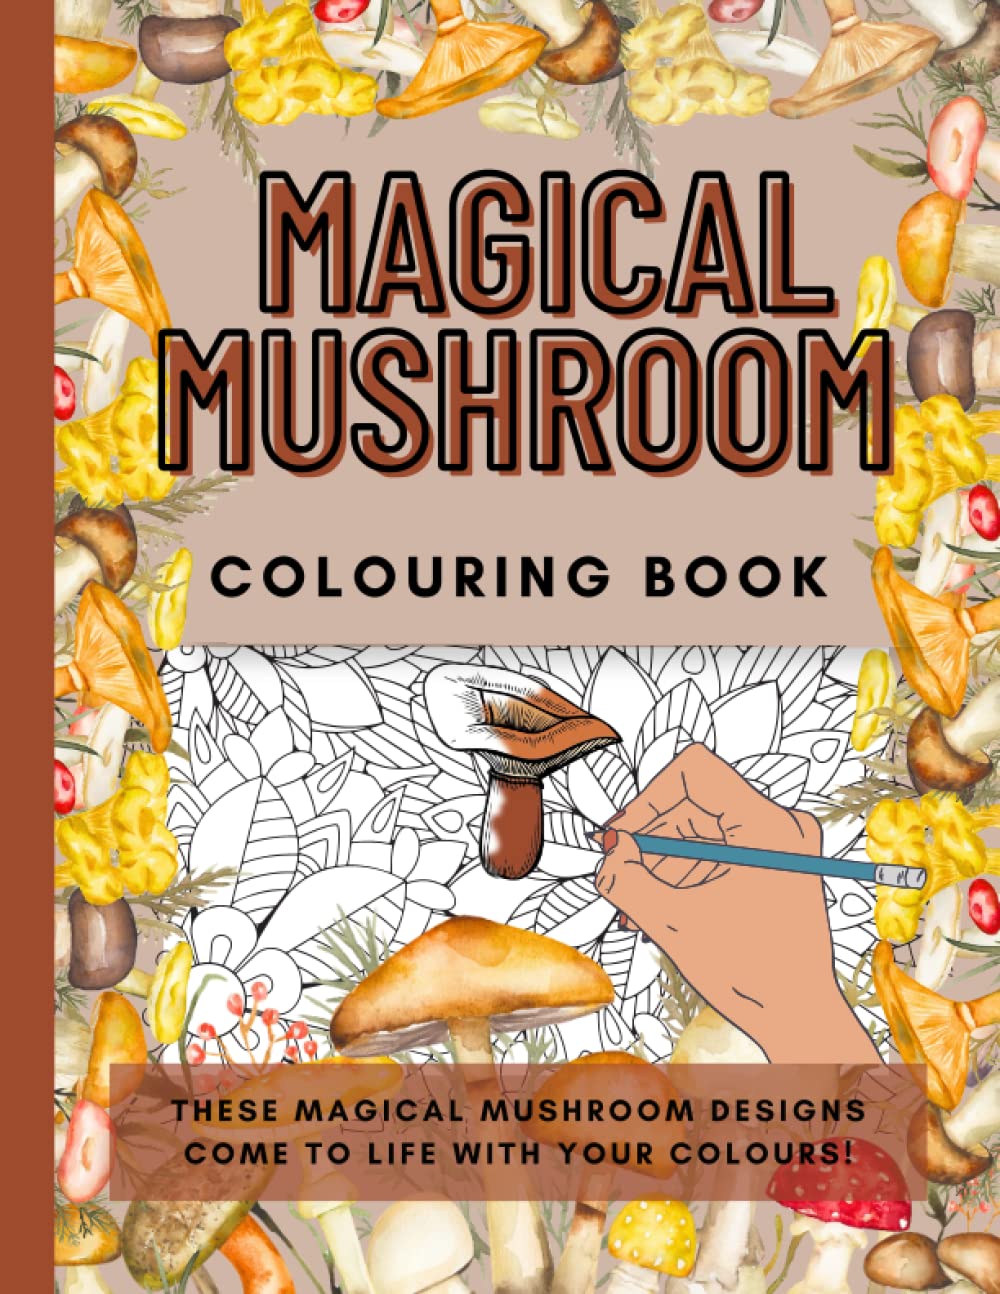 Mushroom colouring book